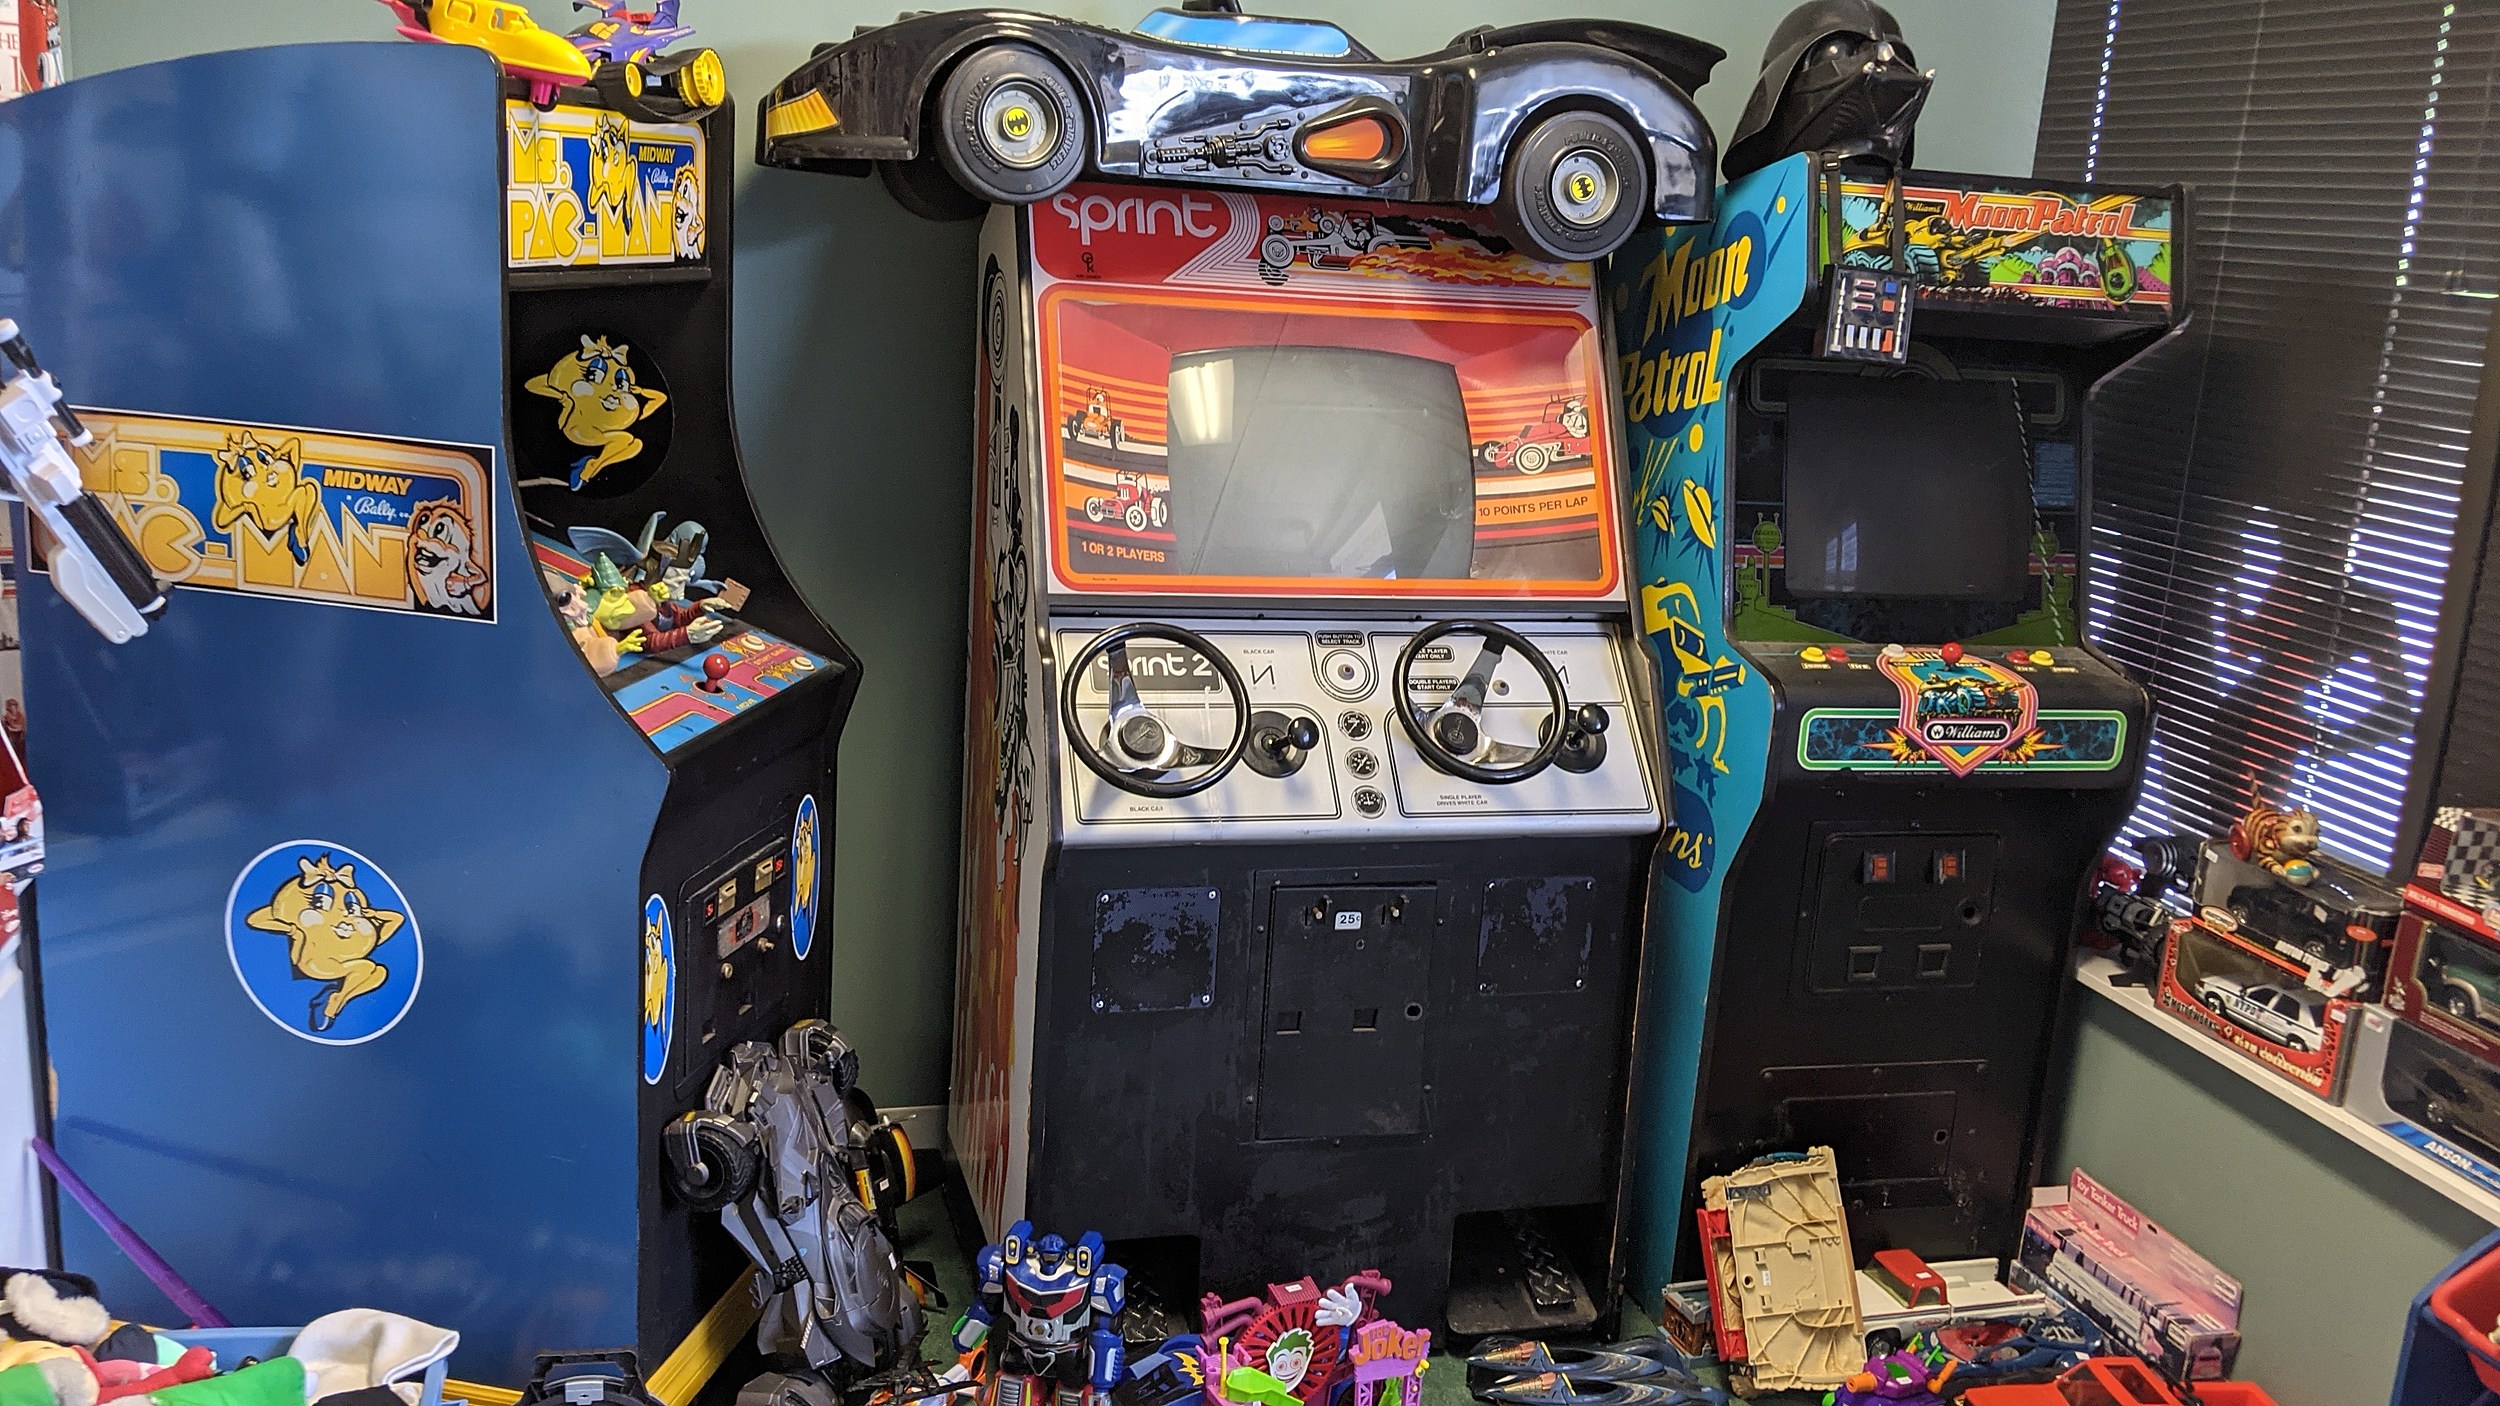 This Arcade Machine Reminds me of Jolly Joker photo